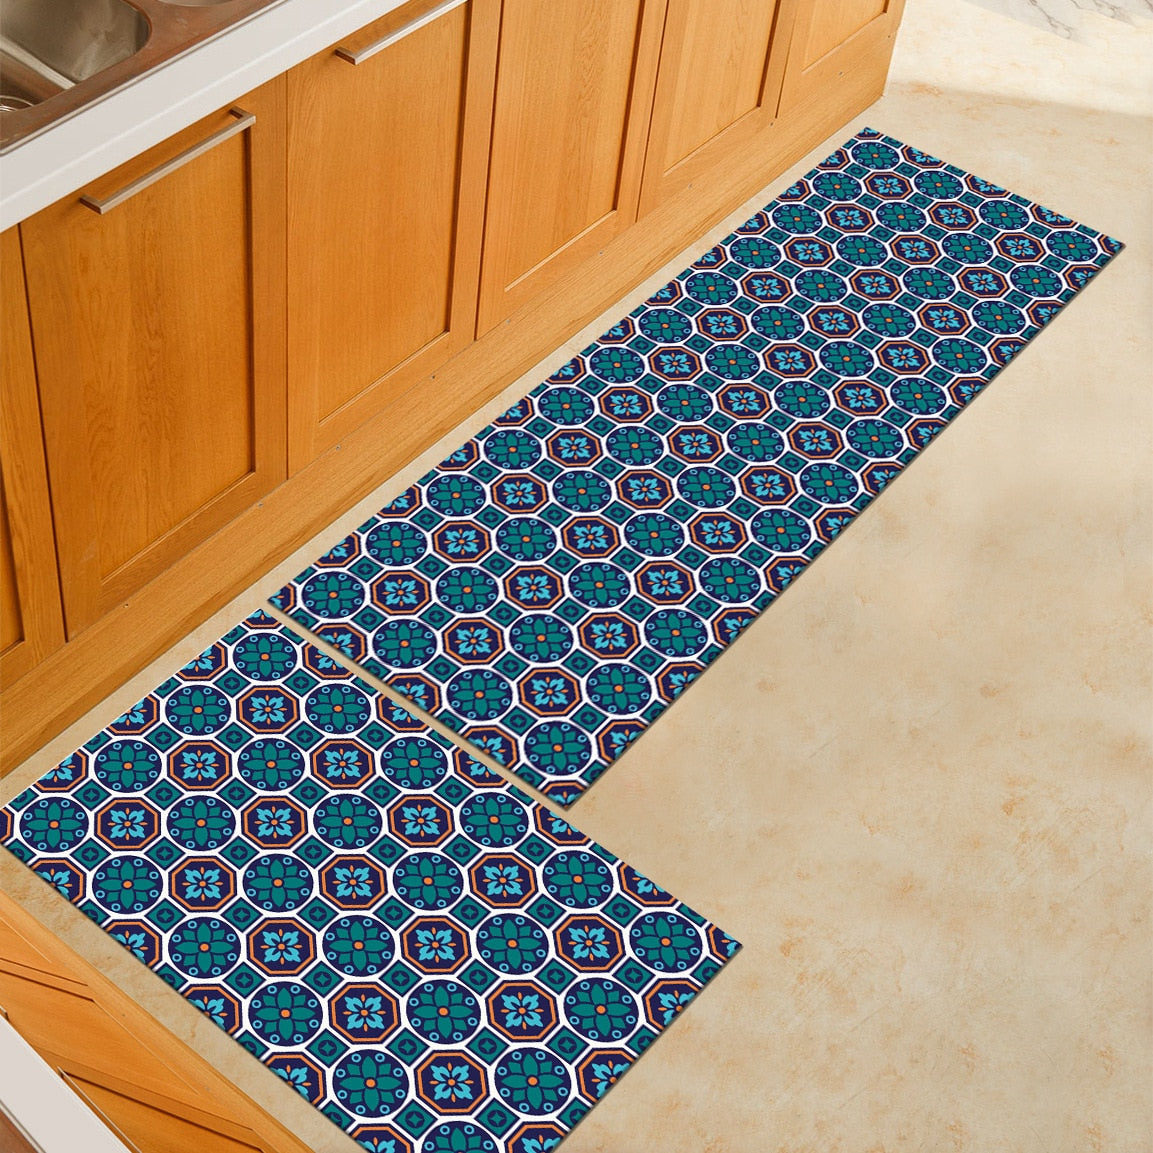 Zeegle Nordic Style Anti-slip Kitchen Mats Area Rug For Living Room Bathroom Floor Mats Flannel Soft Bedroom Carpets Bedside Rug